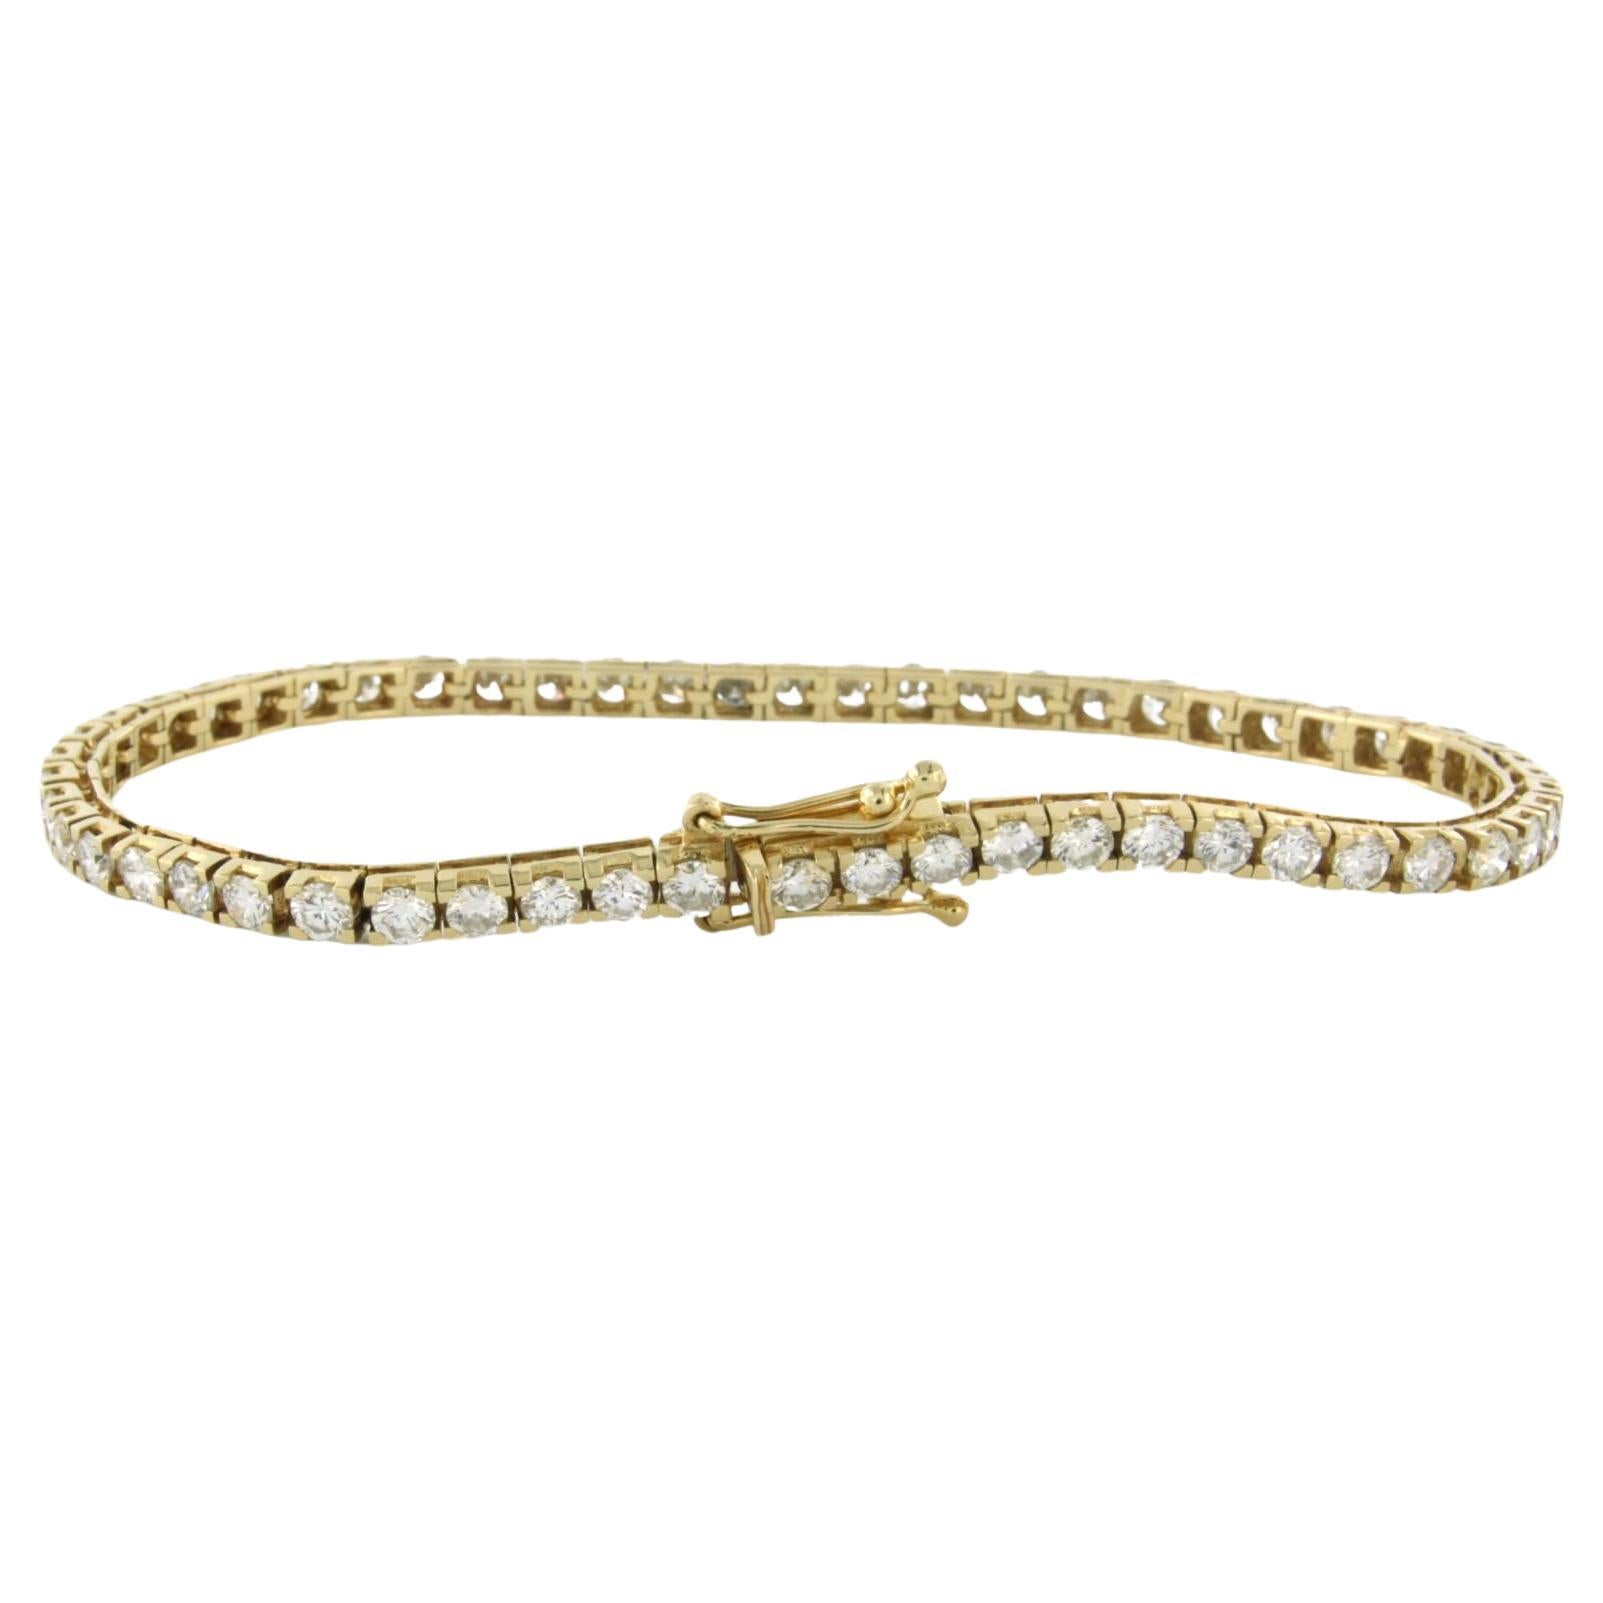 Tennis bracelet set with diamonds 14k yellow gold